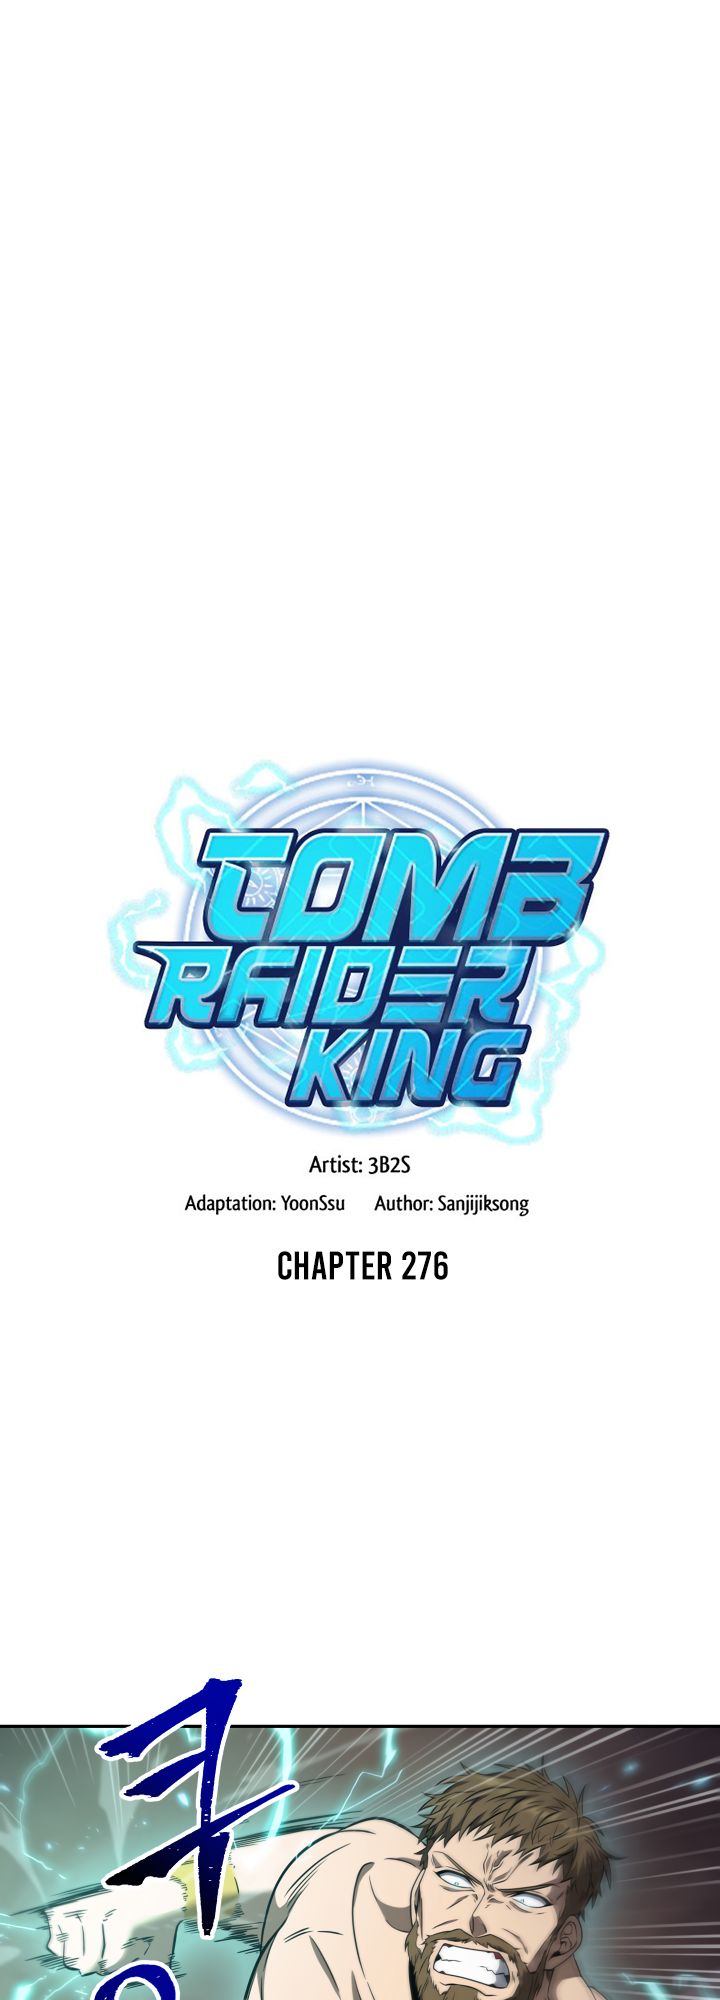 tomb_raider_king_276_1